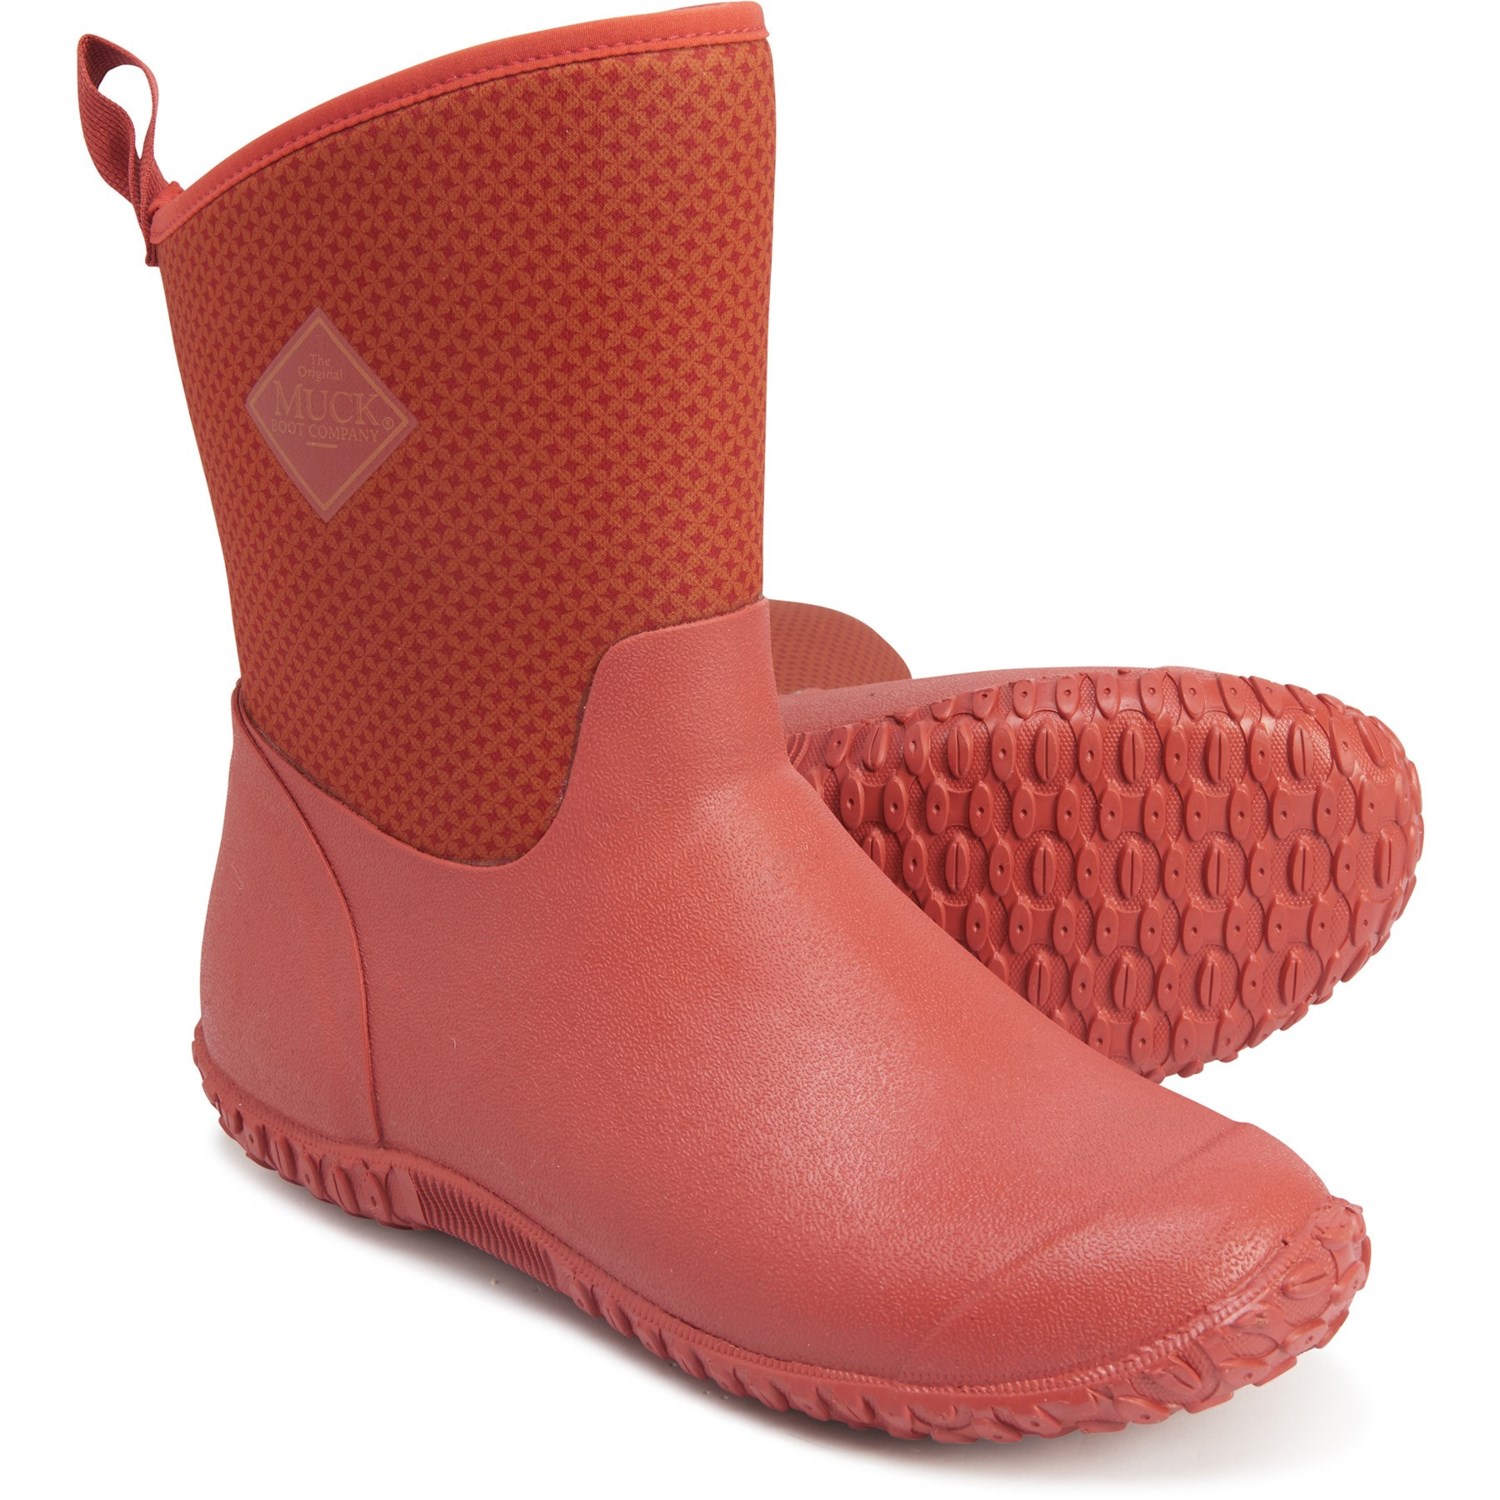 mucks rain boots